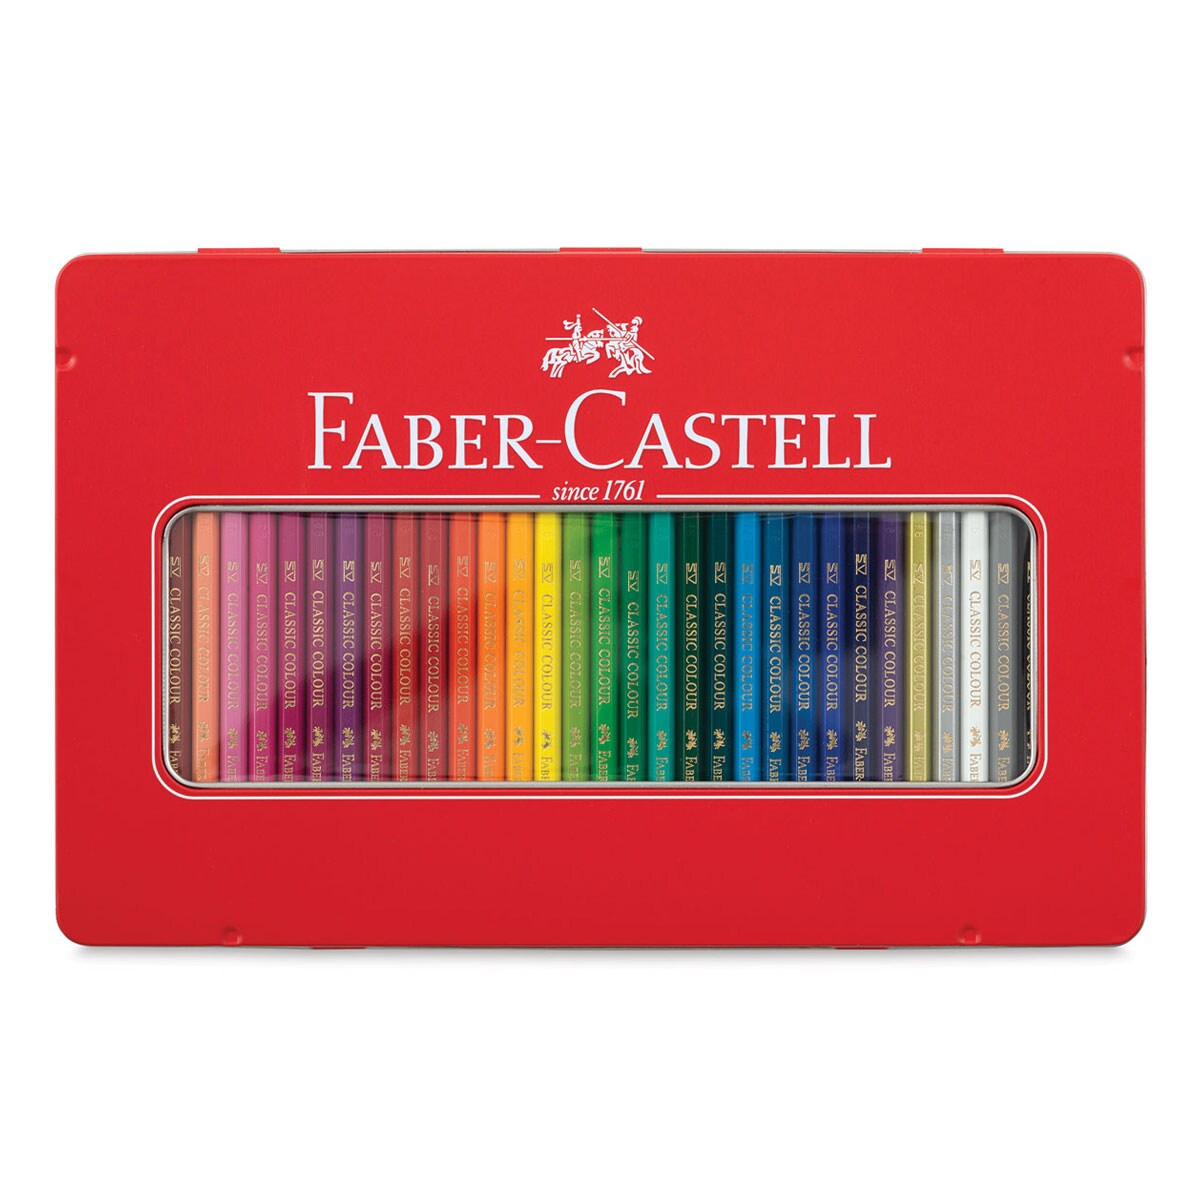 Faber-Castell Classic Color Pencil Tin Set - 36 Count